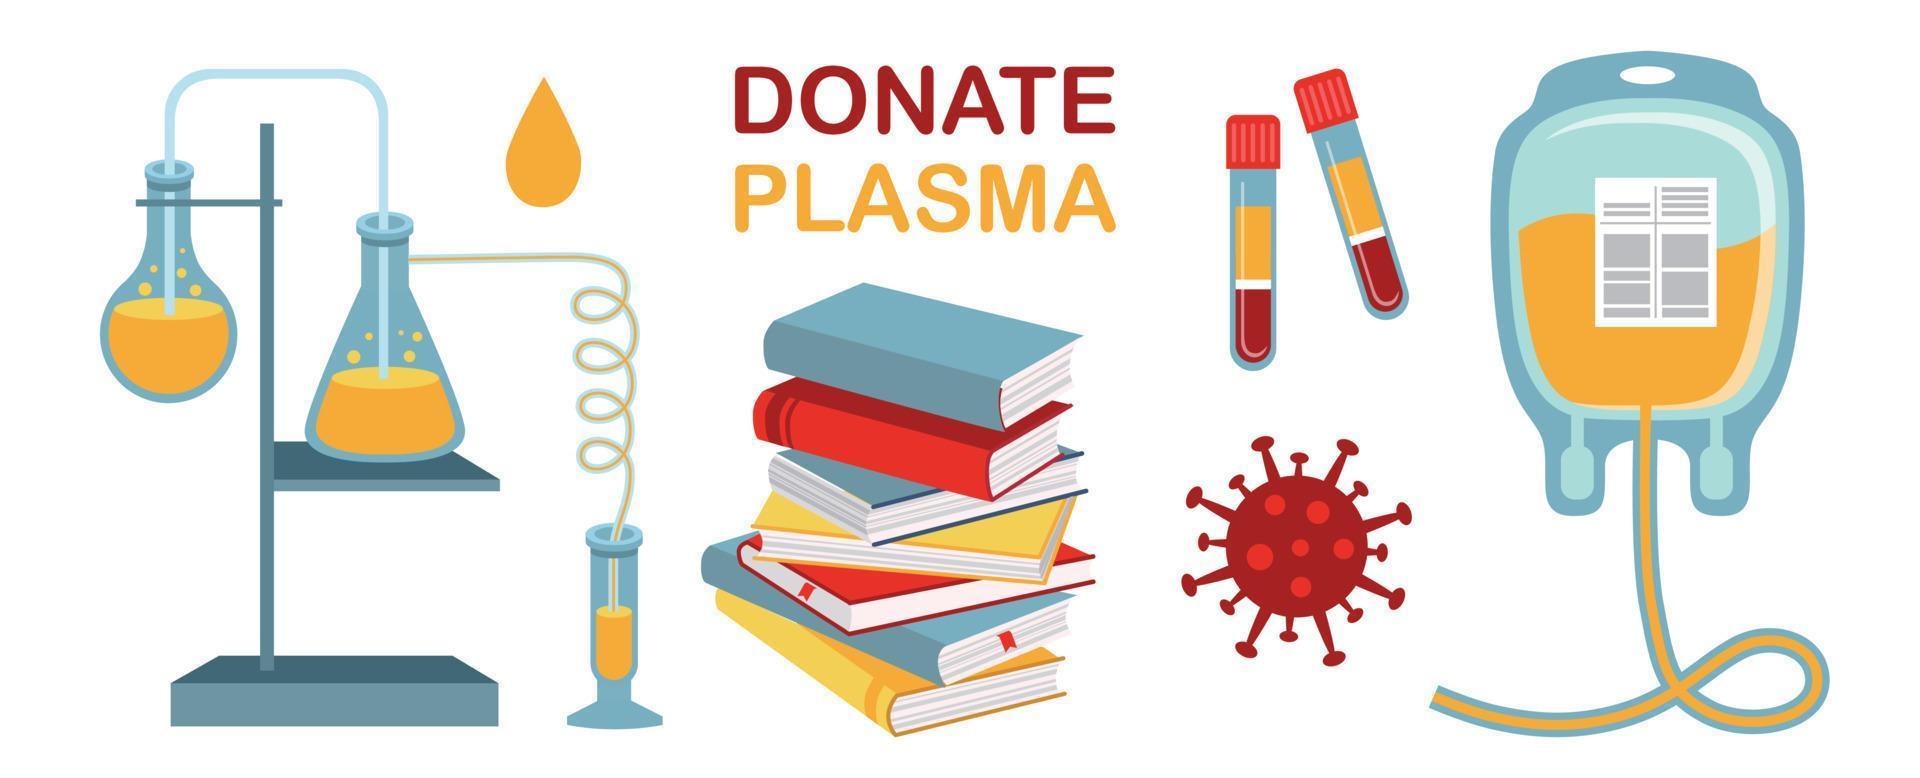 Donate plasma. Medical analysis. Stack of books flat vector illustration.